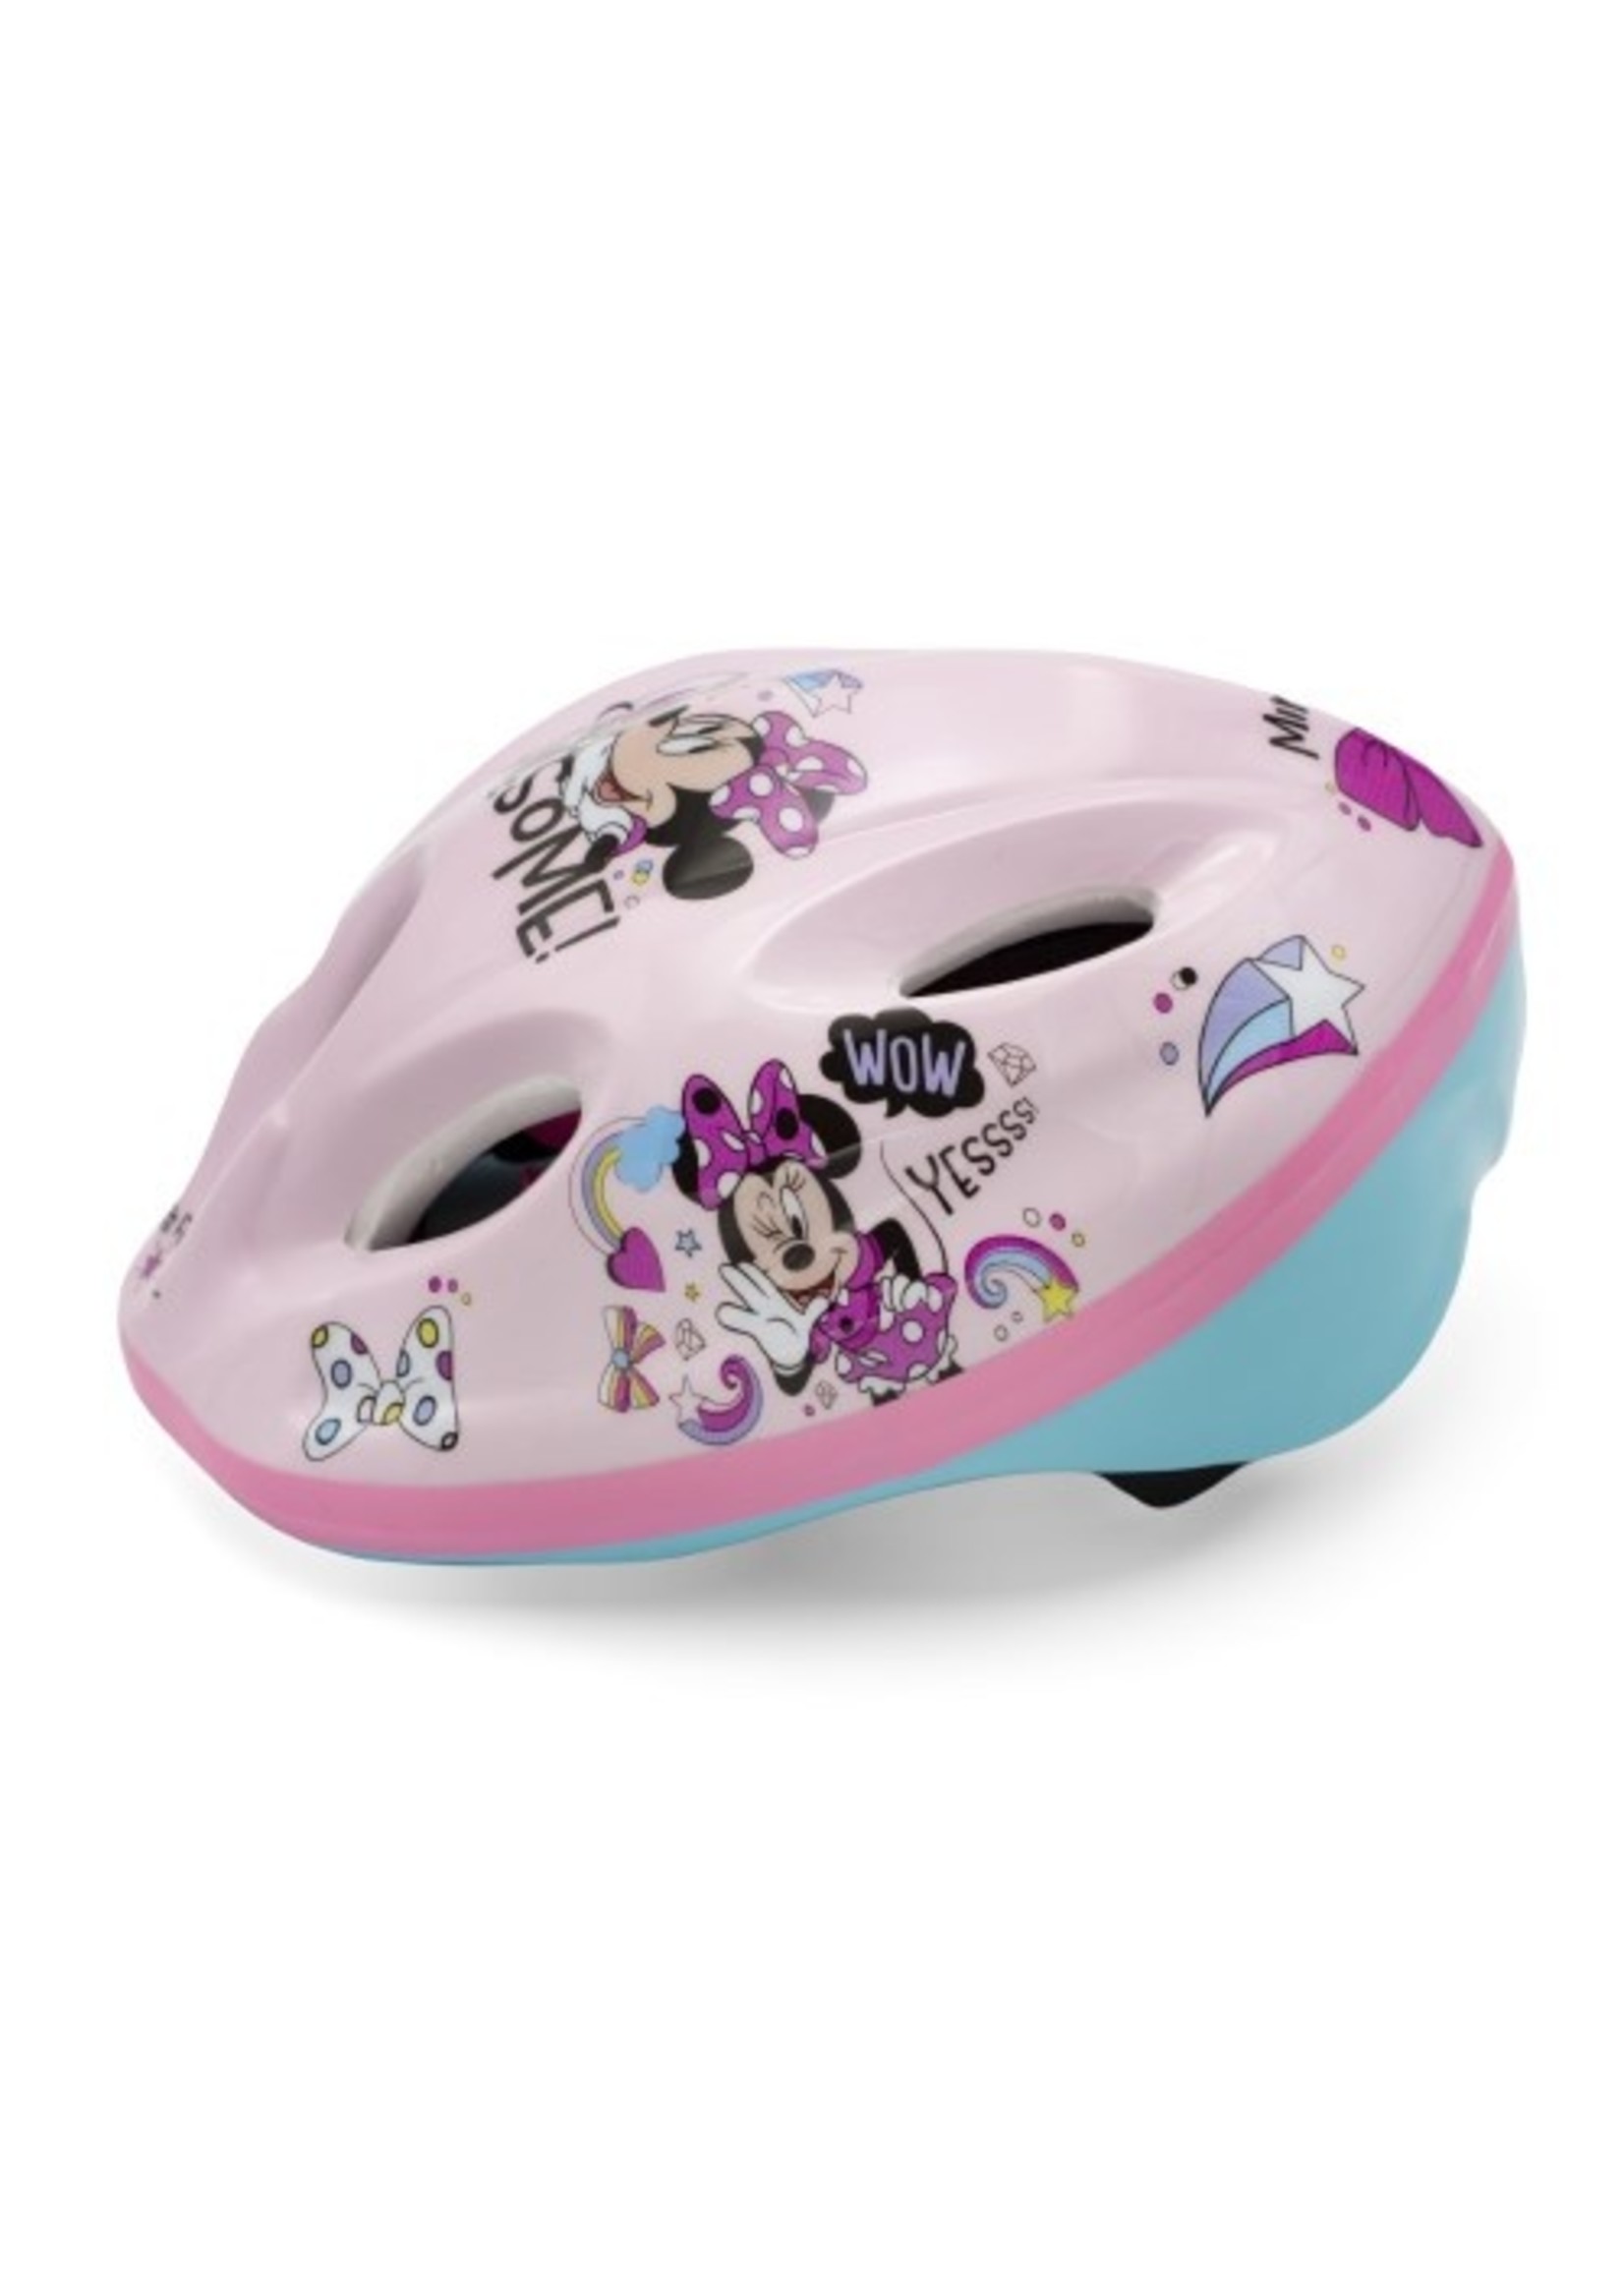 Disney Minnie Mouse bicycle helmet from Disney pink